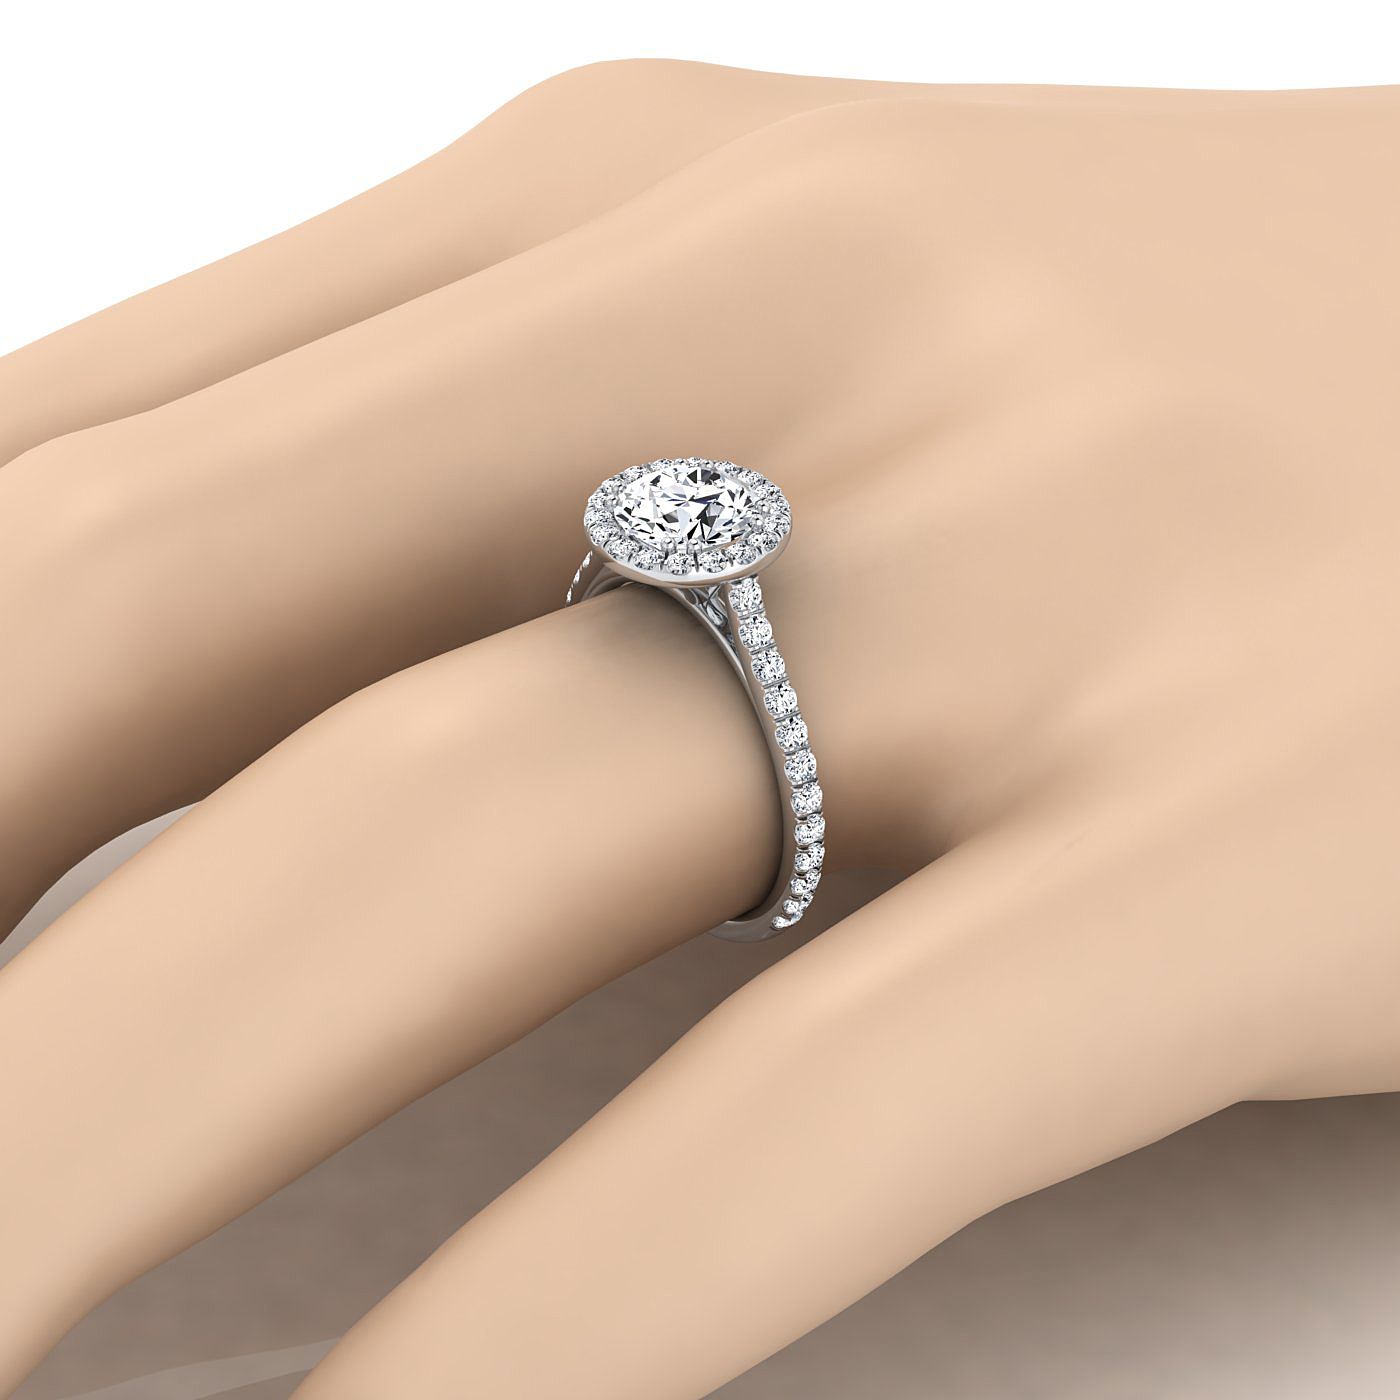 14K White Gold Round Brilliant Ruby Horizontal Fancy East West Diamond Halo Engagement Ring -1/2ctw